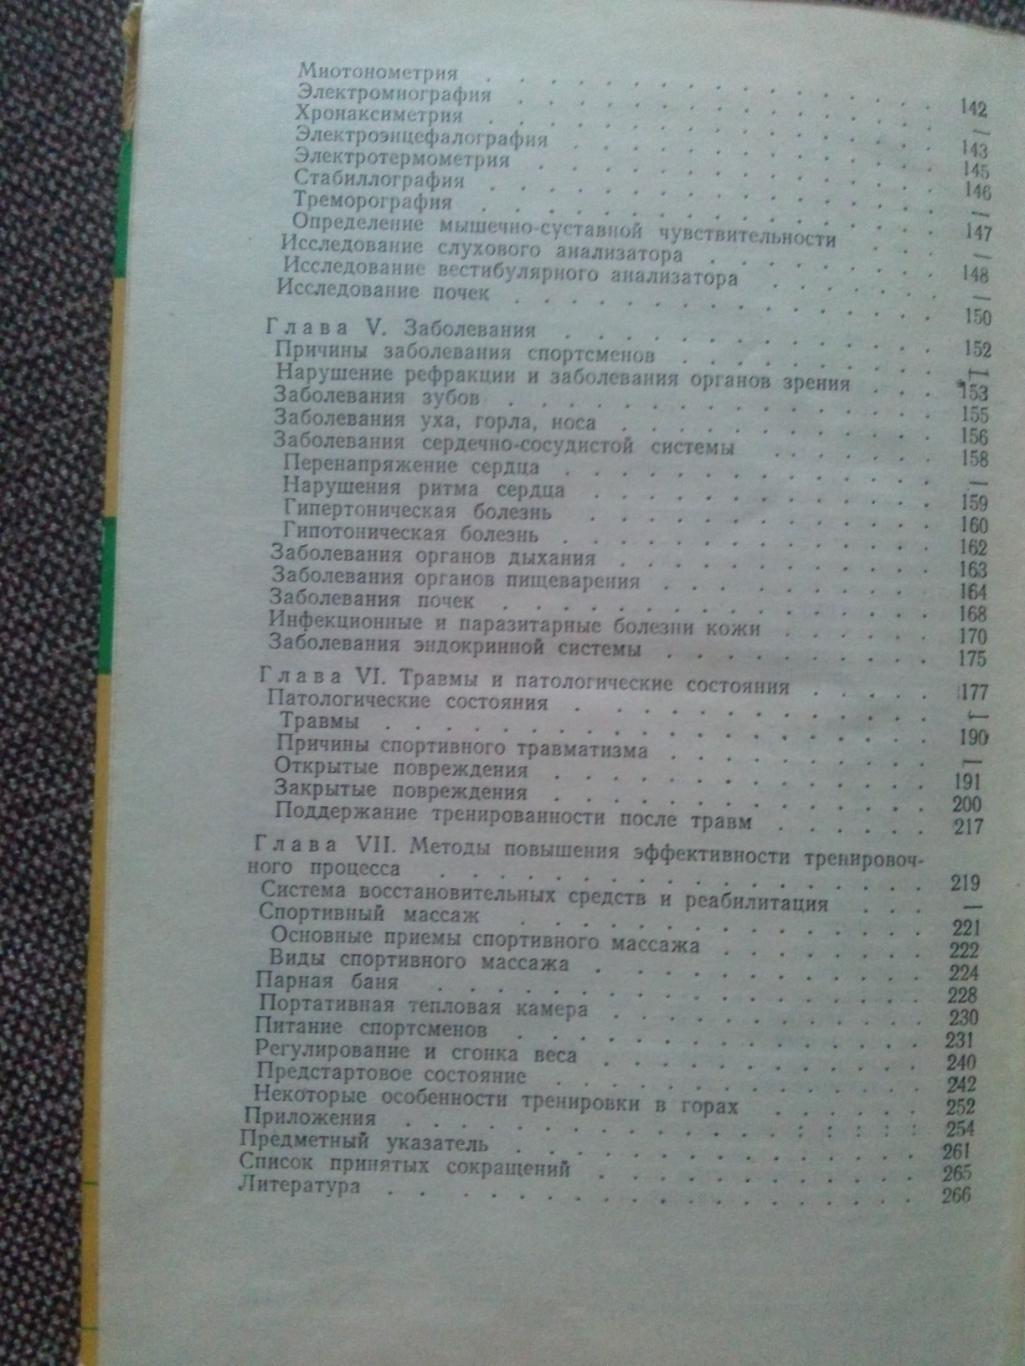 Медицинский справочник тренера 1976 г.ФиССпорт Спортивная медицина 2